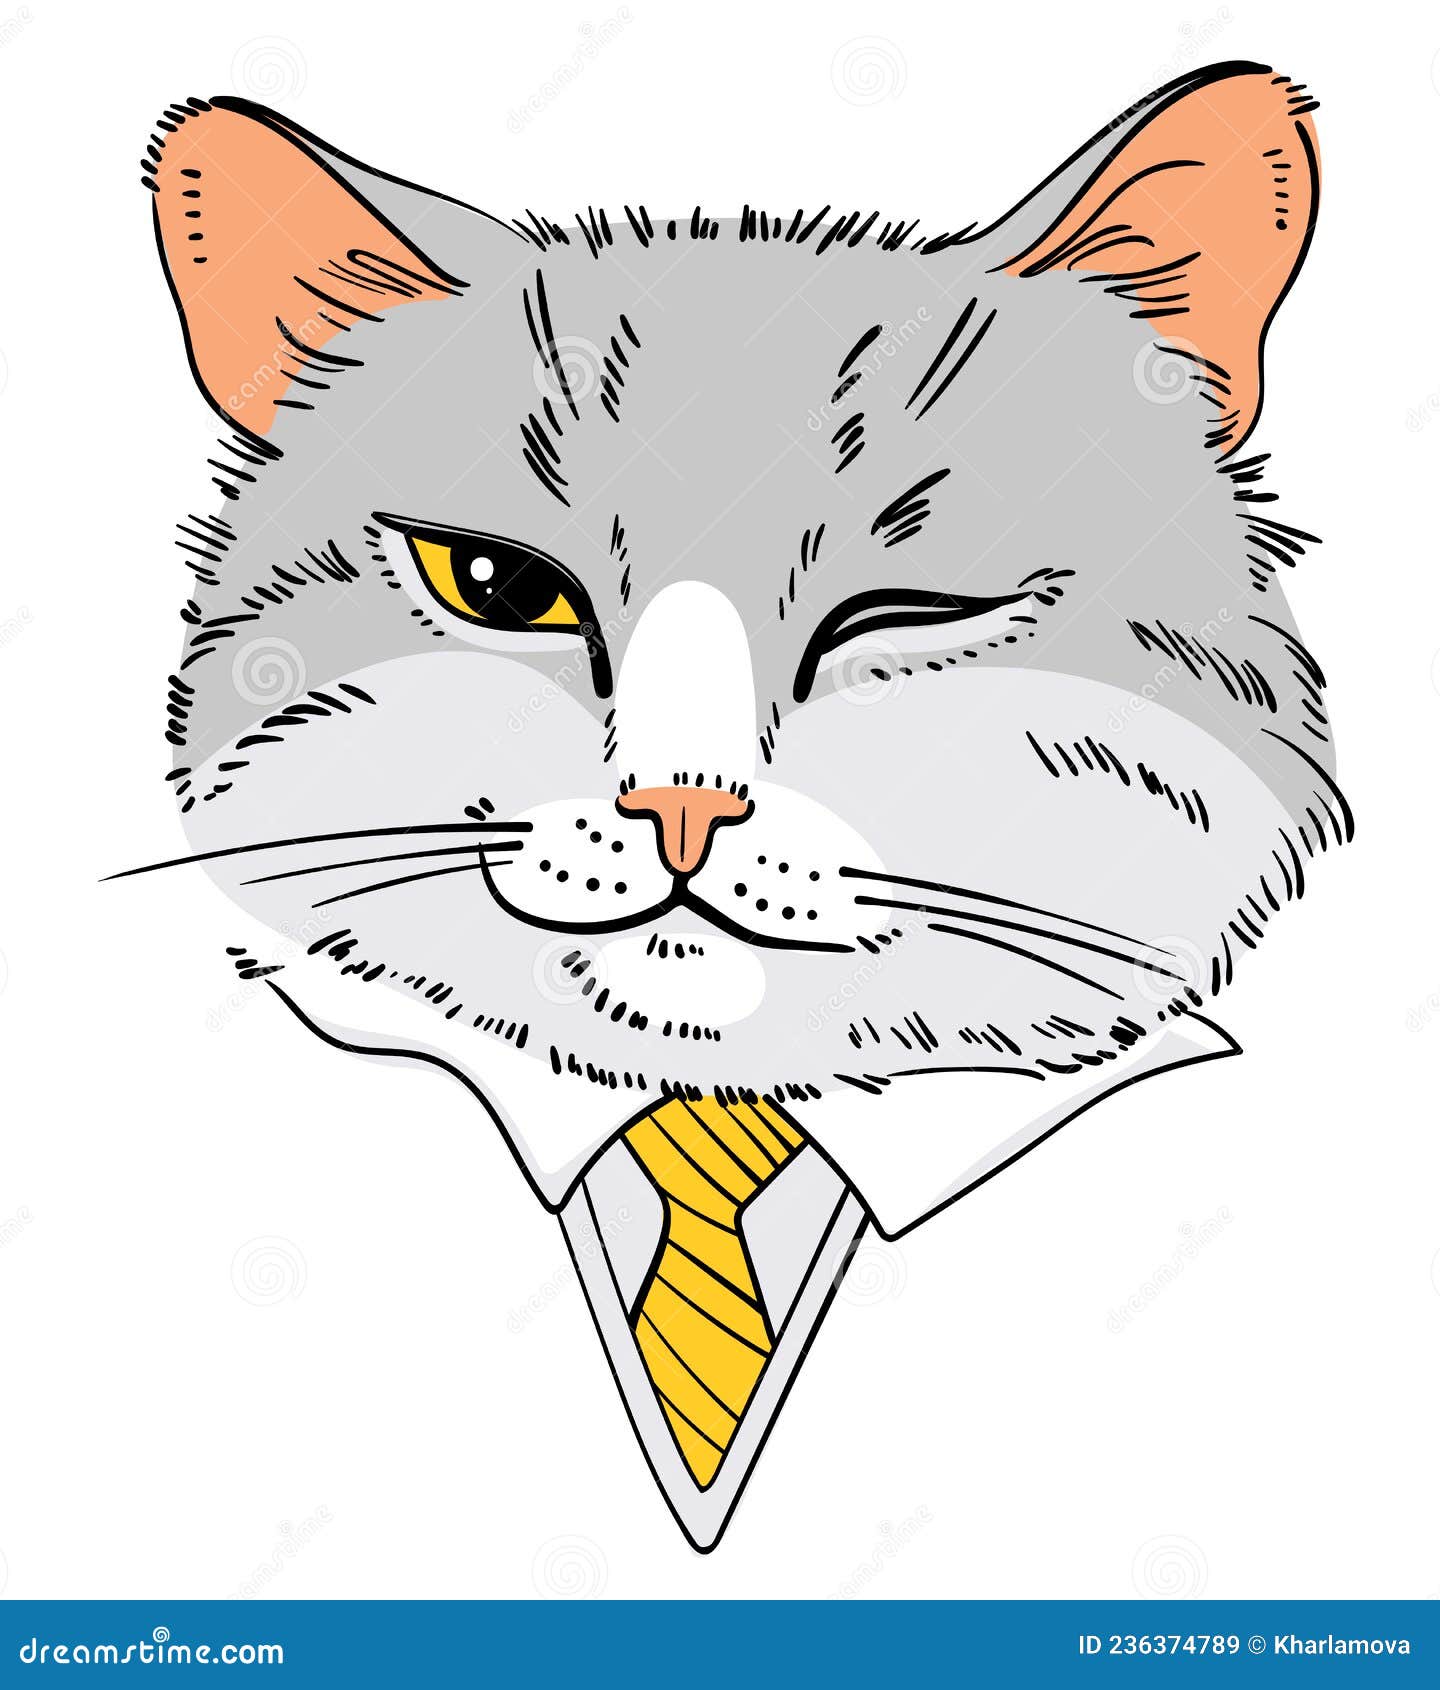 portrait of cat in business suit. cat smirk